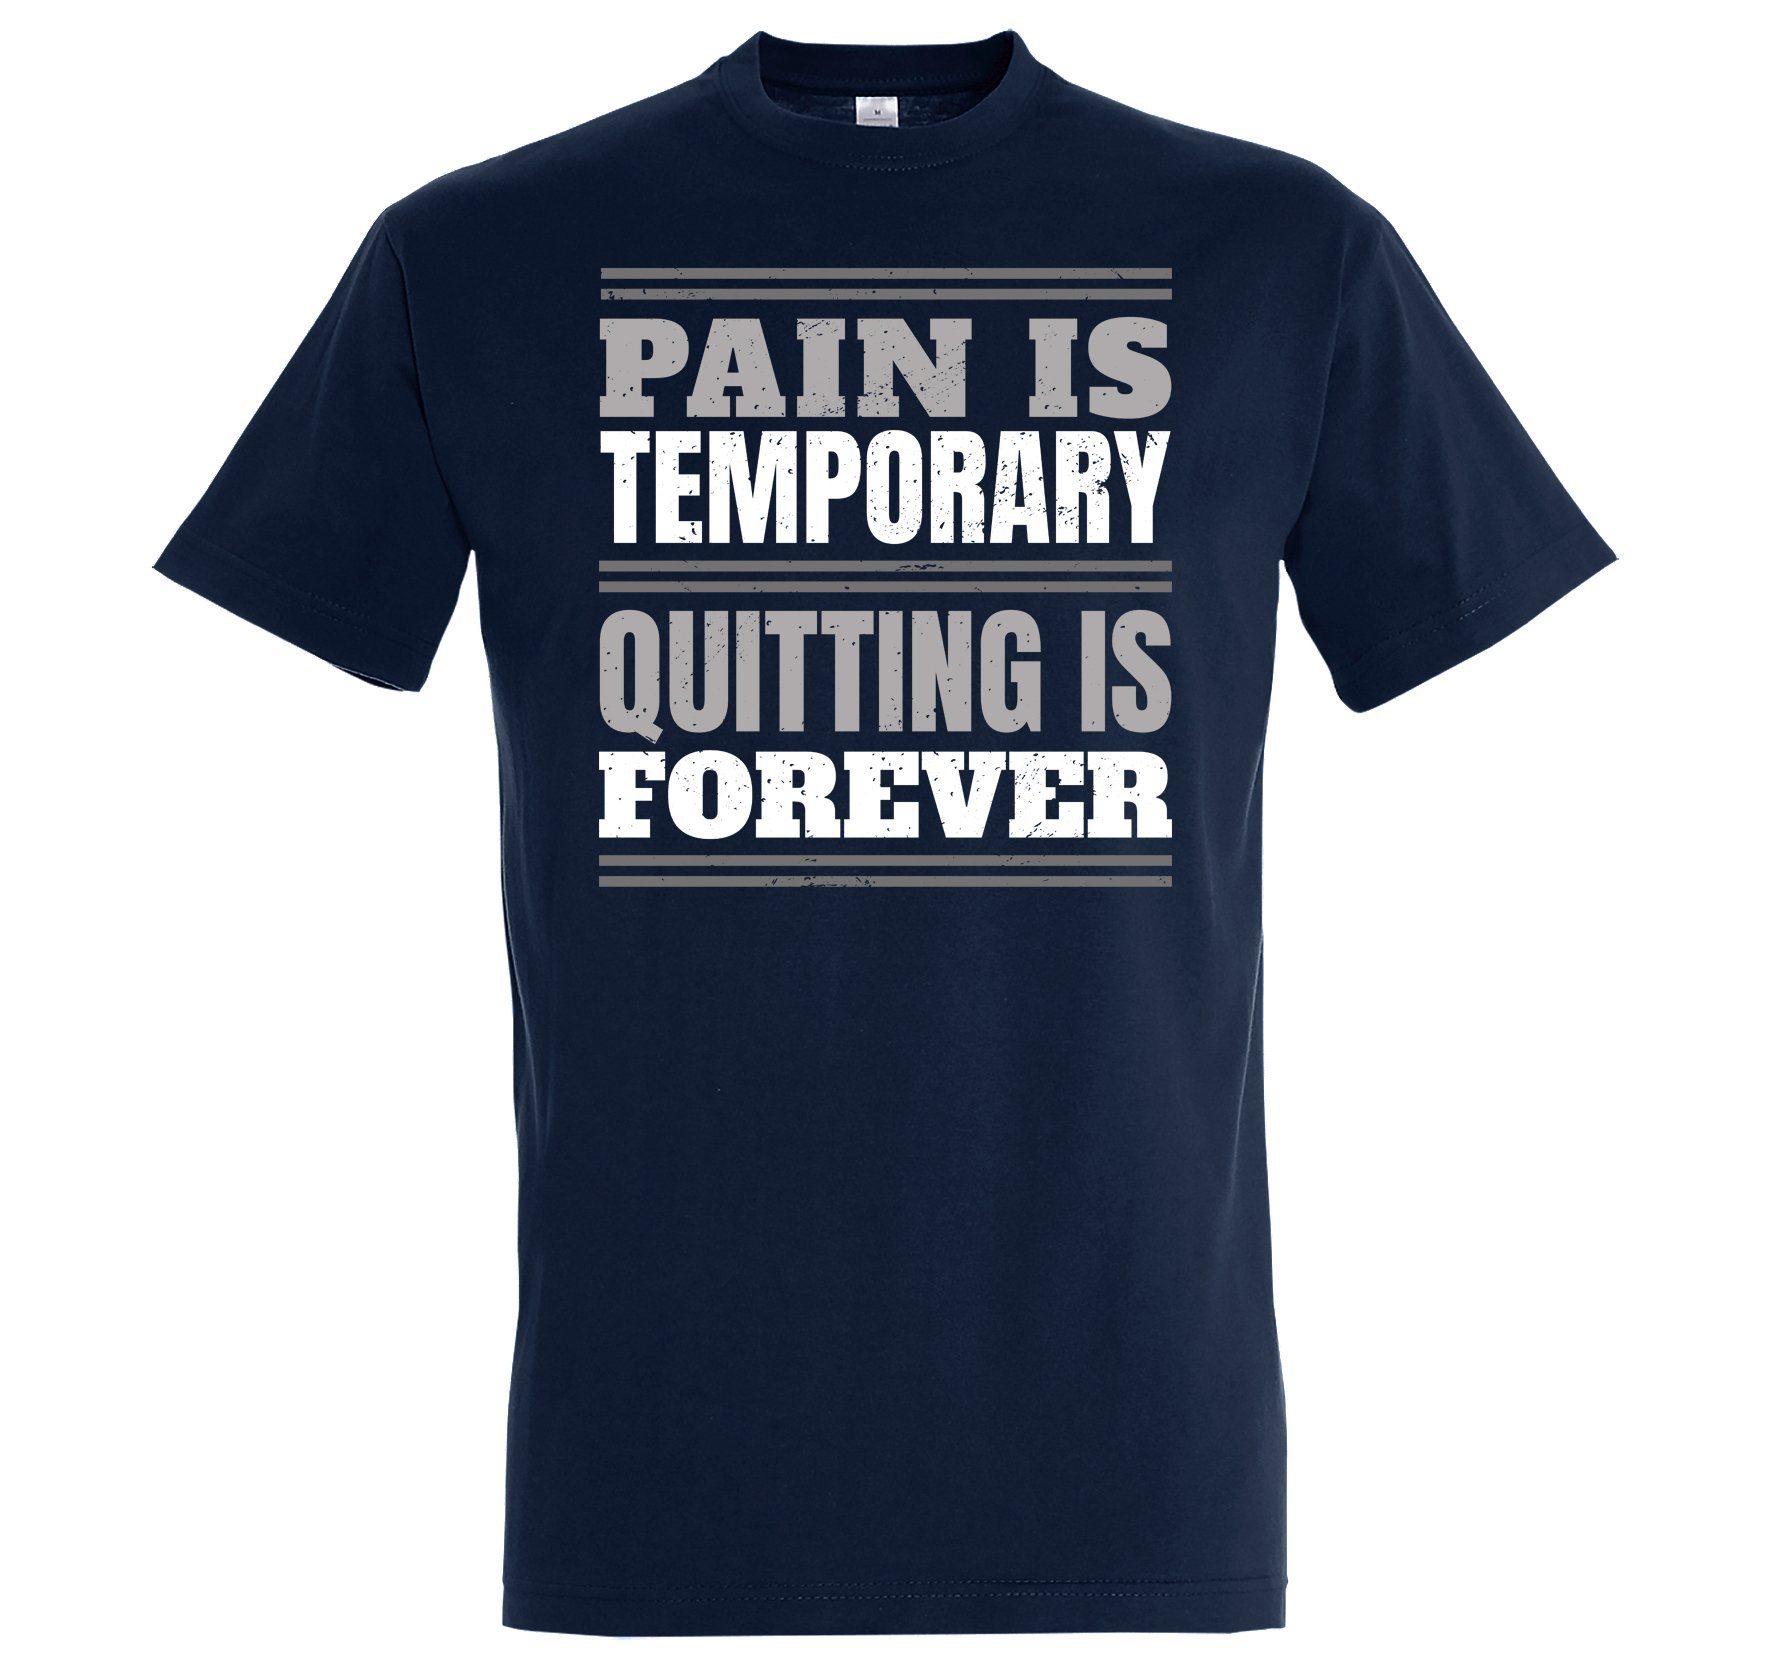 TEMPORARY, IS FOREVER! mit Navy QUITTING Frontdruck Shirt PAIN T-Shirt Herren Designz Youth Trendigem IS